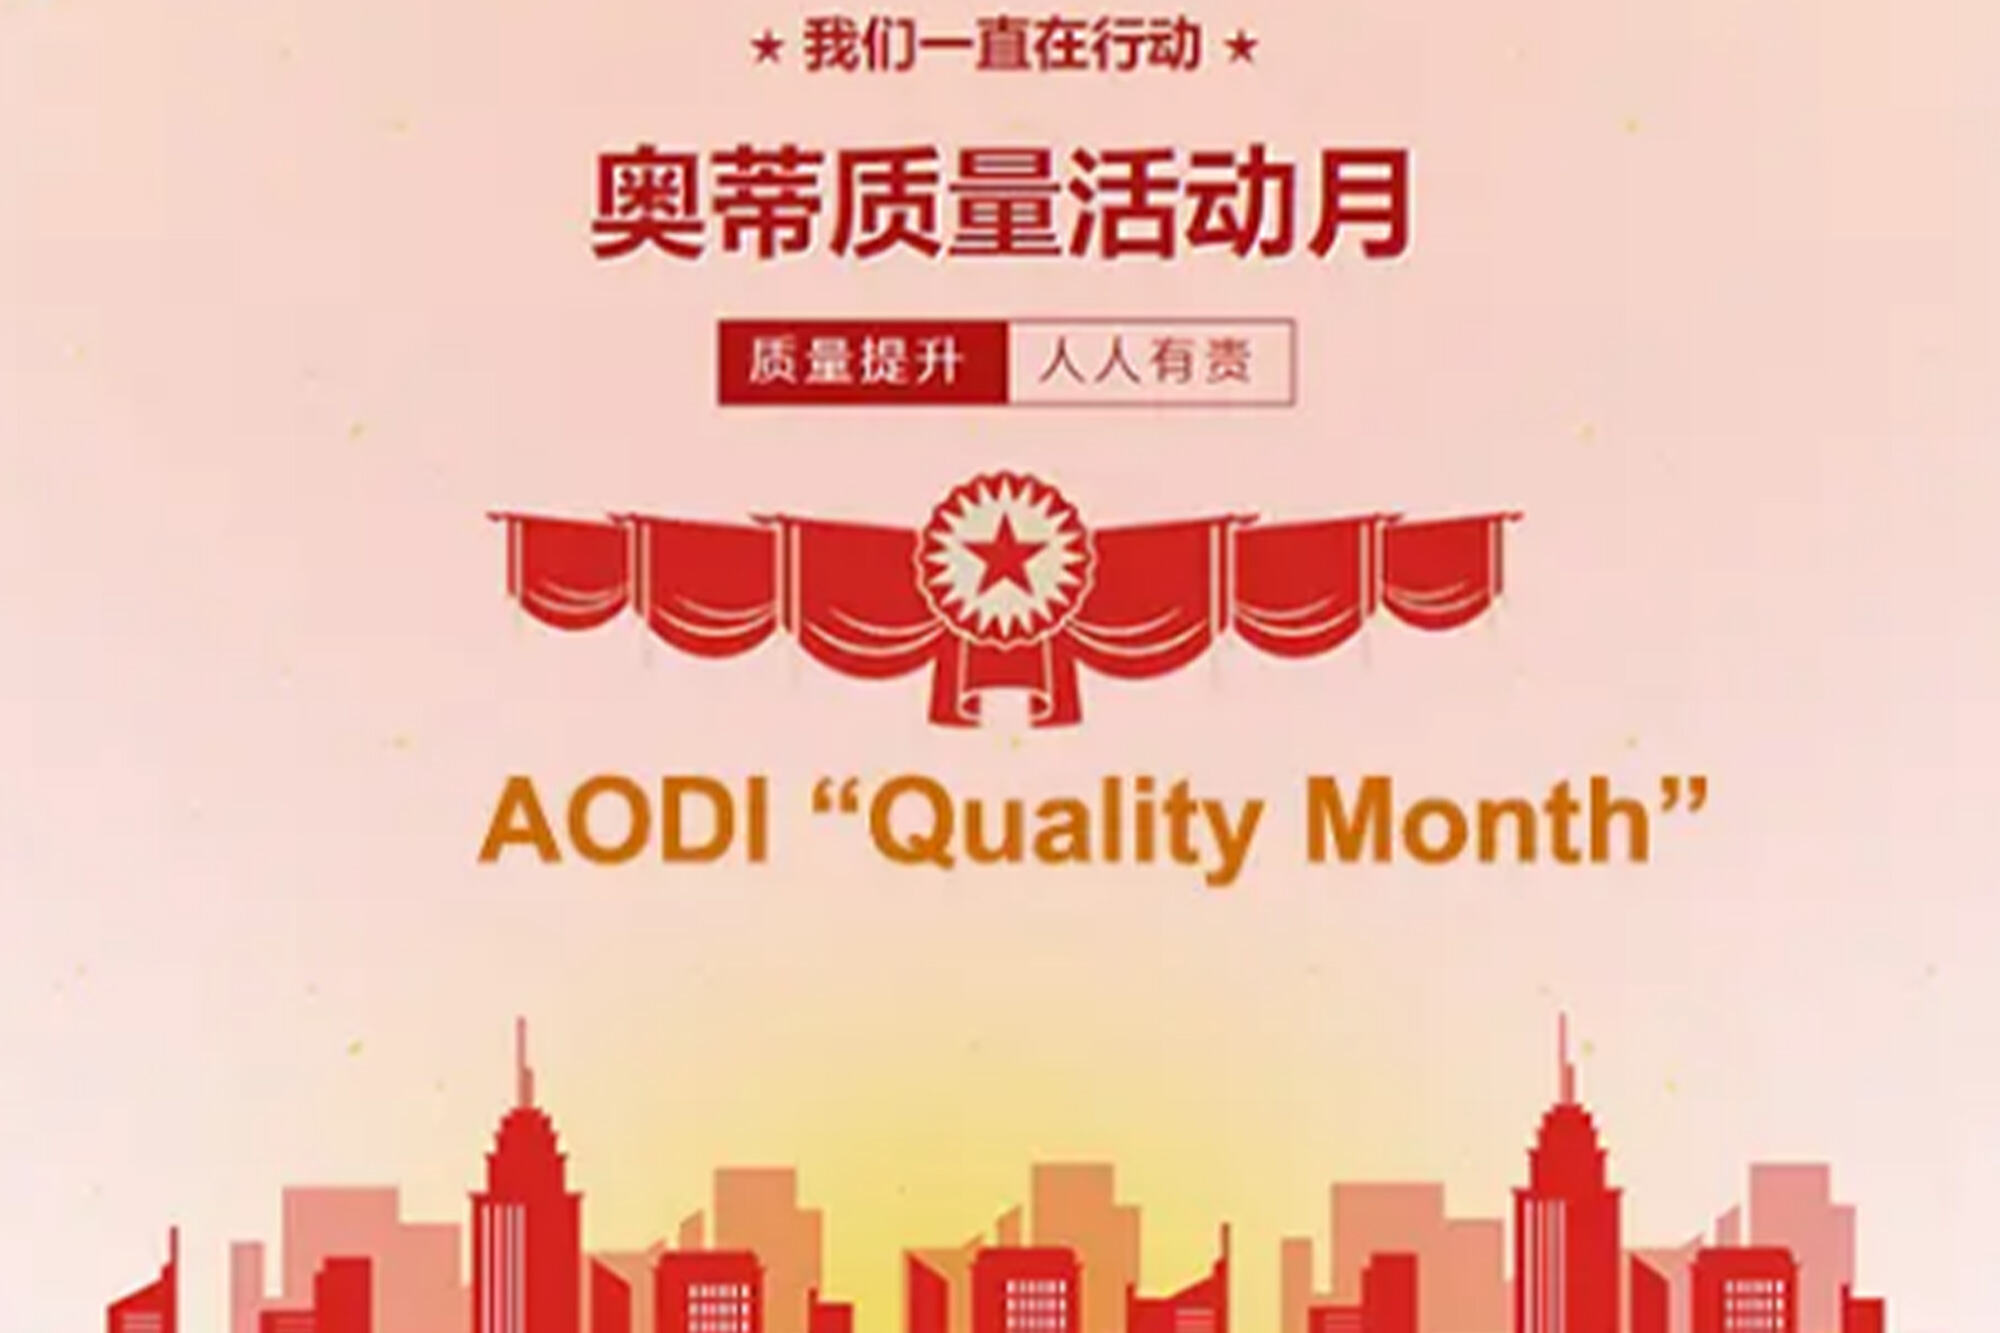 AODI “Quality Month”